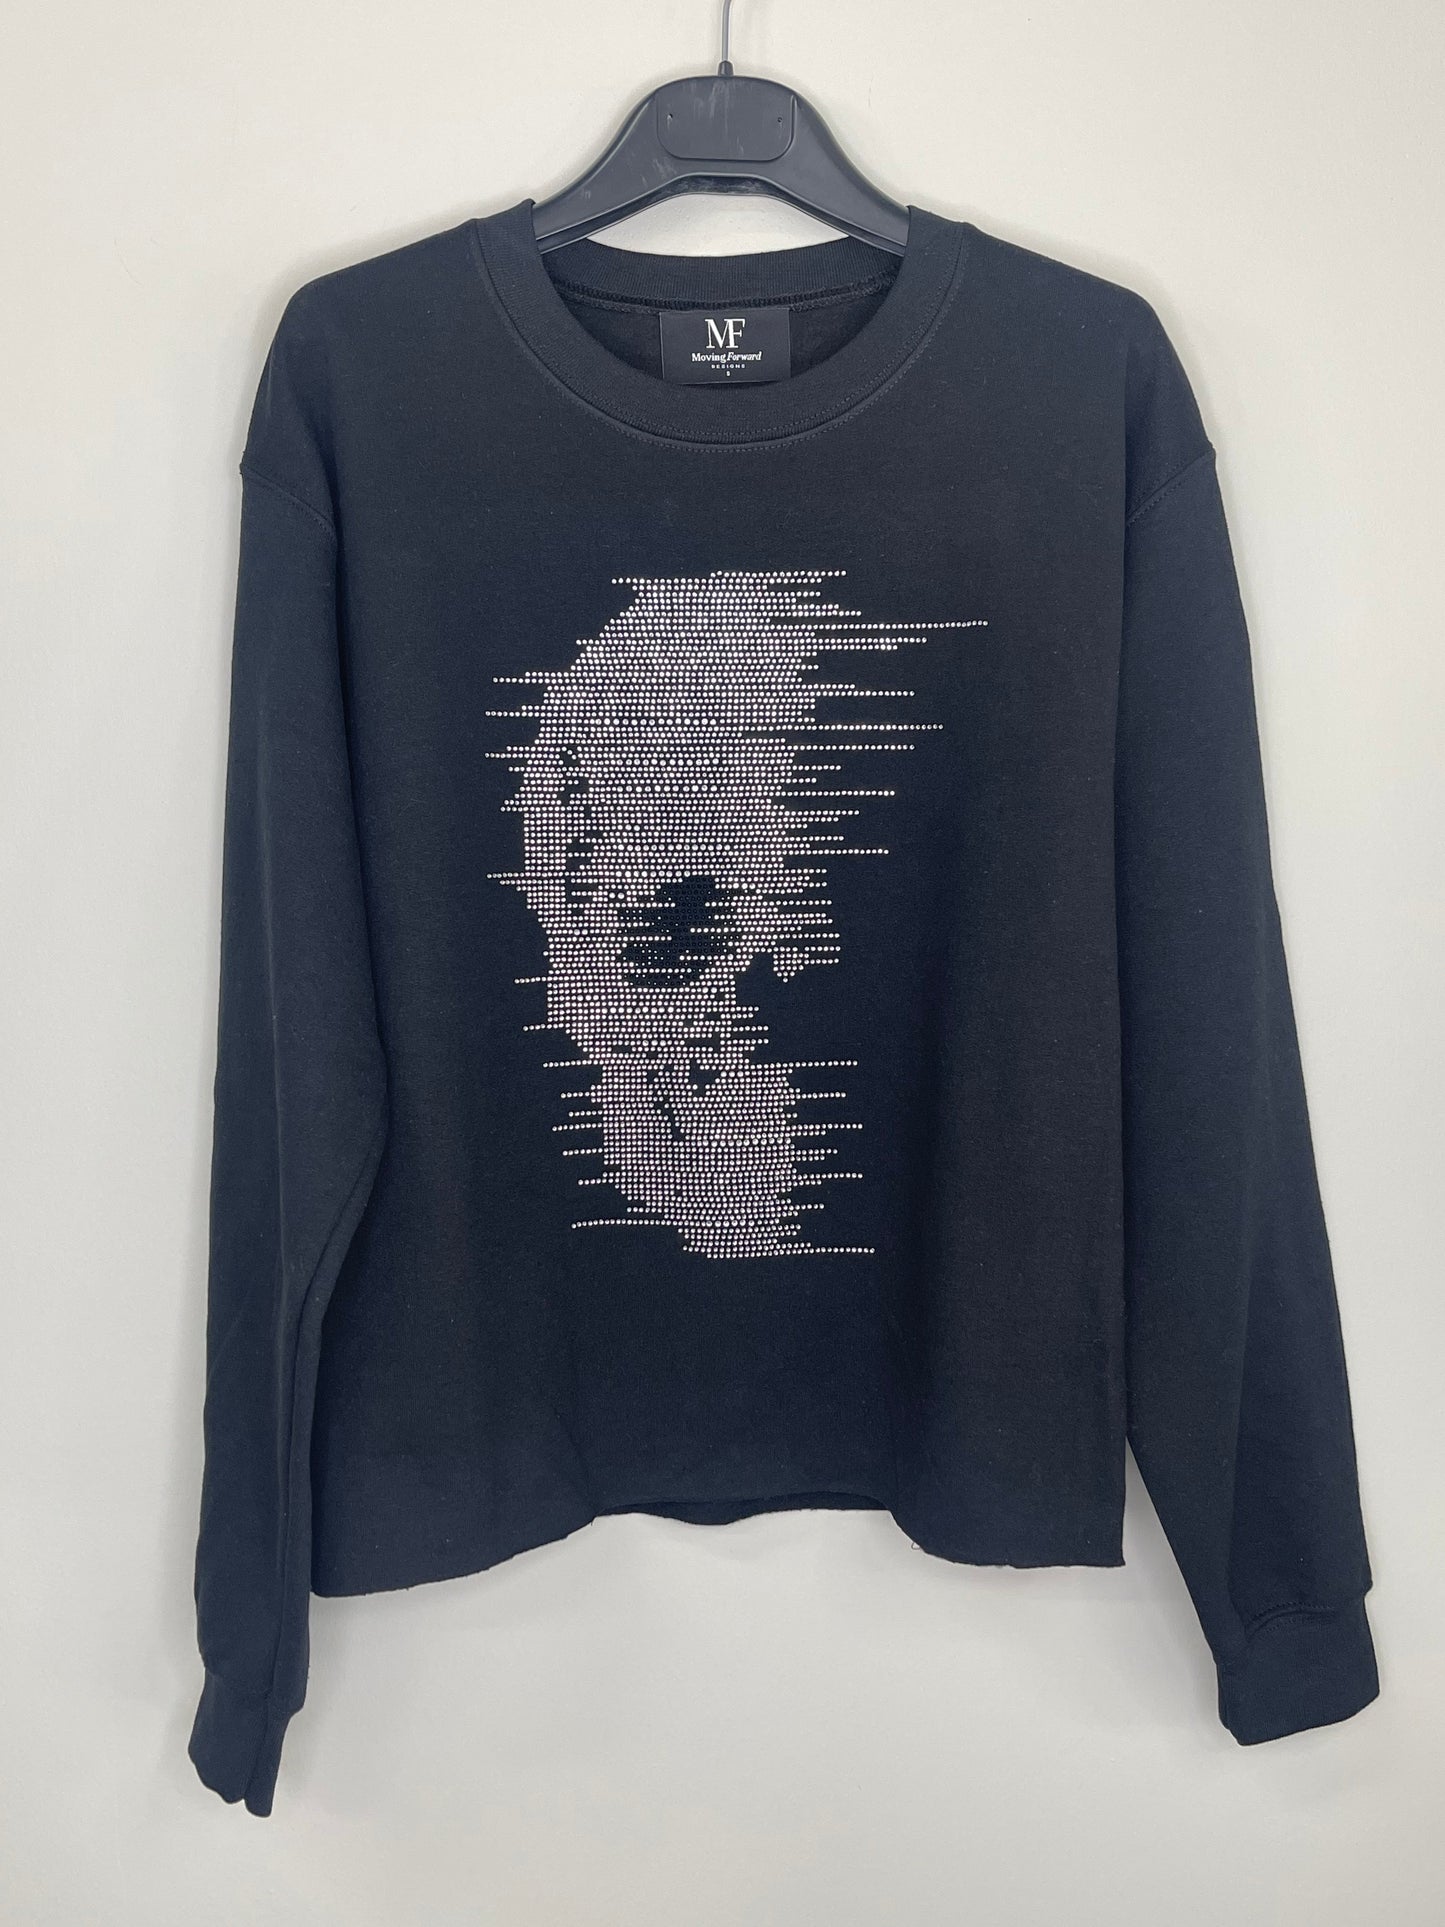 Sweatshirt, Crewneck Black, Silver Faded Skull